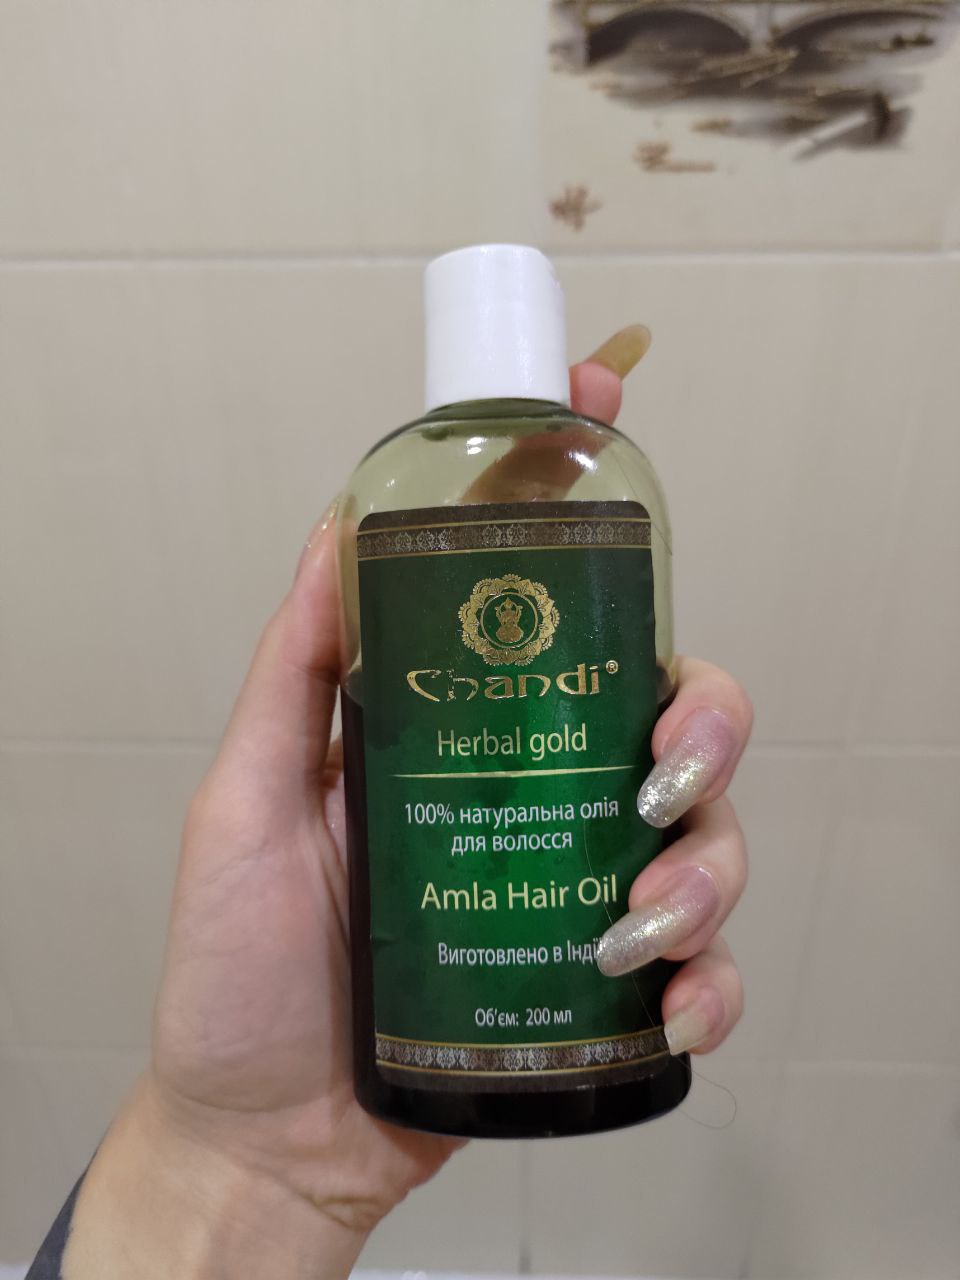 Як вам Chandi Amla Hair Oil?